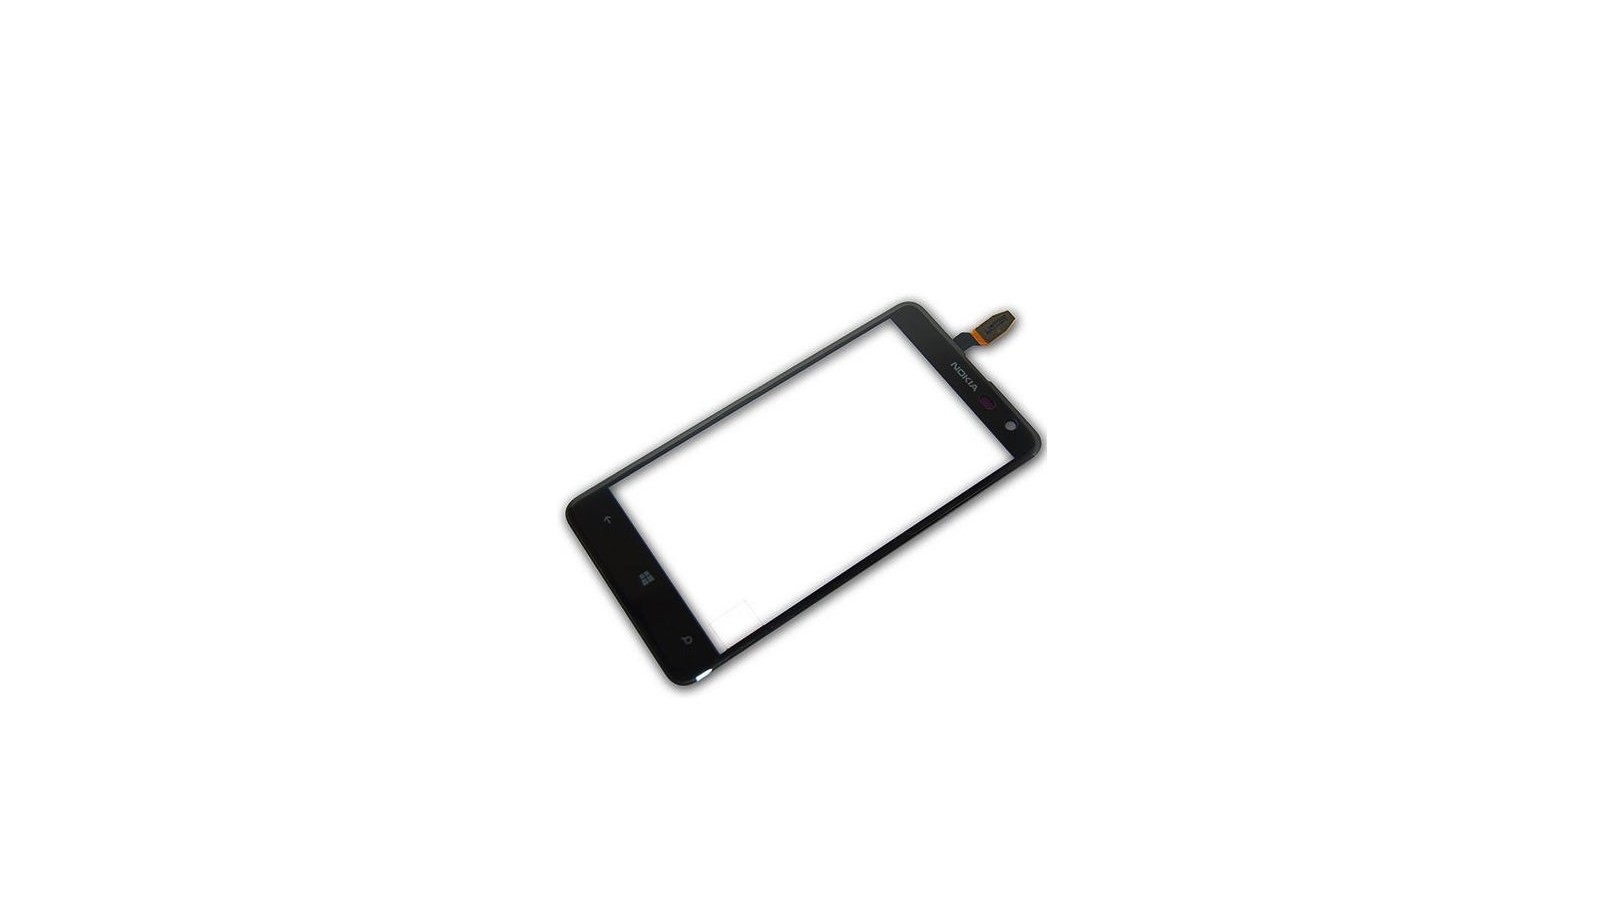 Touch Screen Vetro Nokia Lumia 625 completo cornice frame